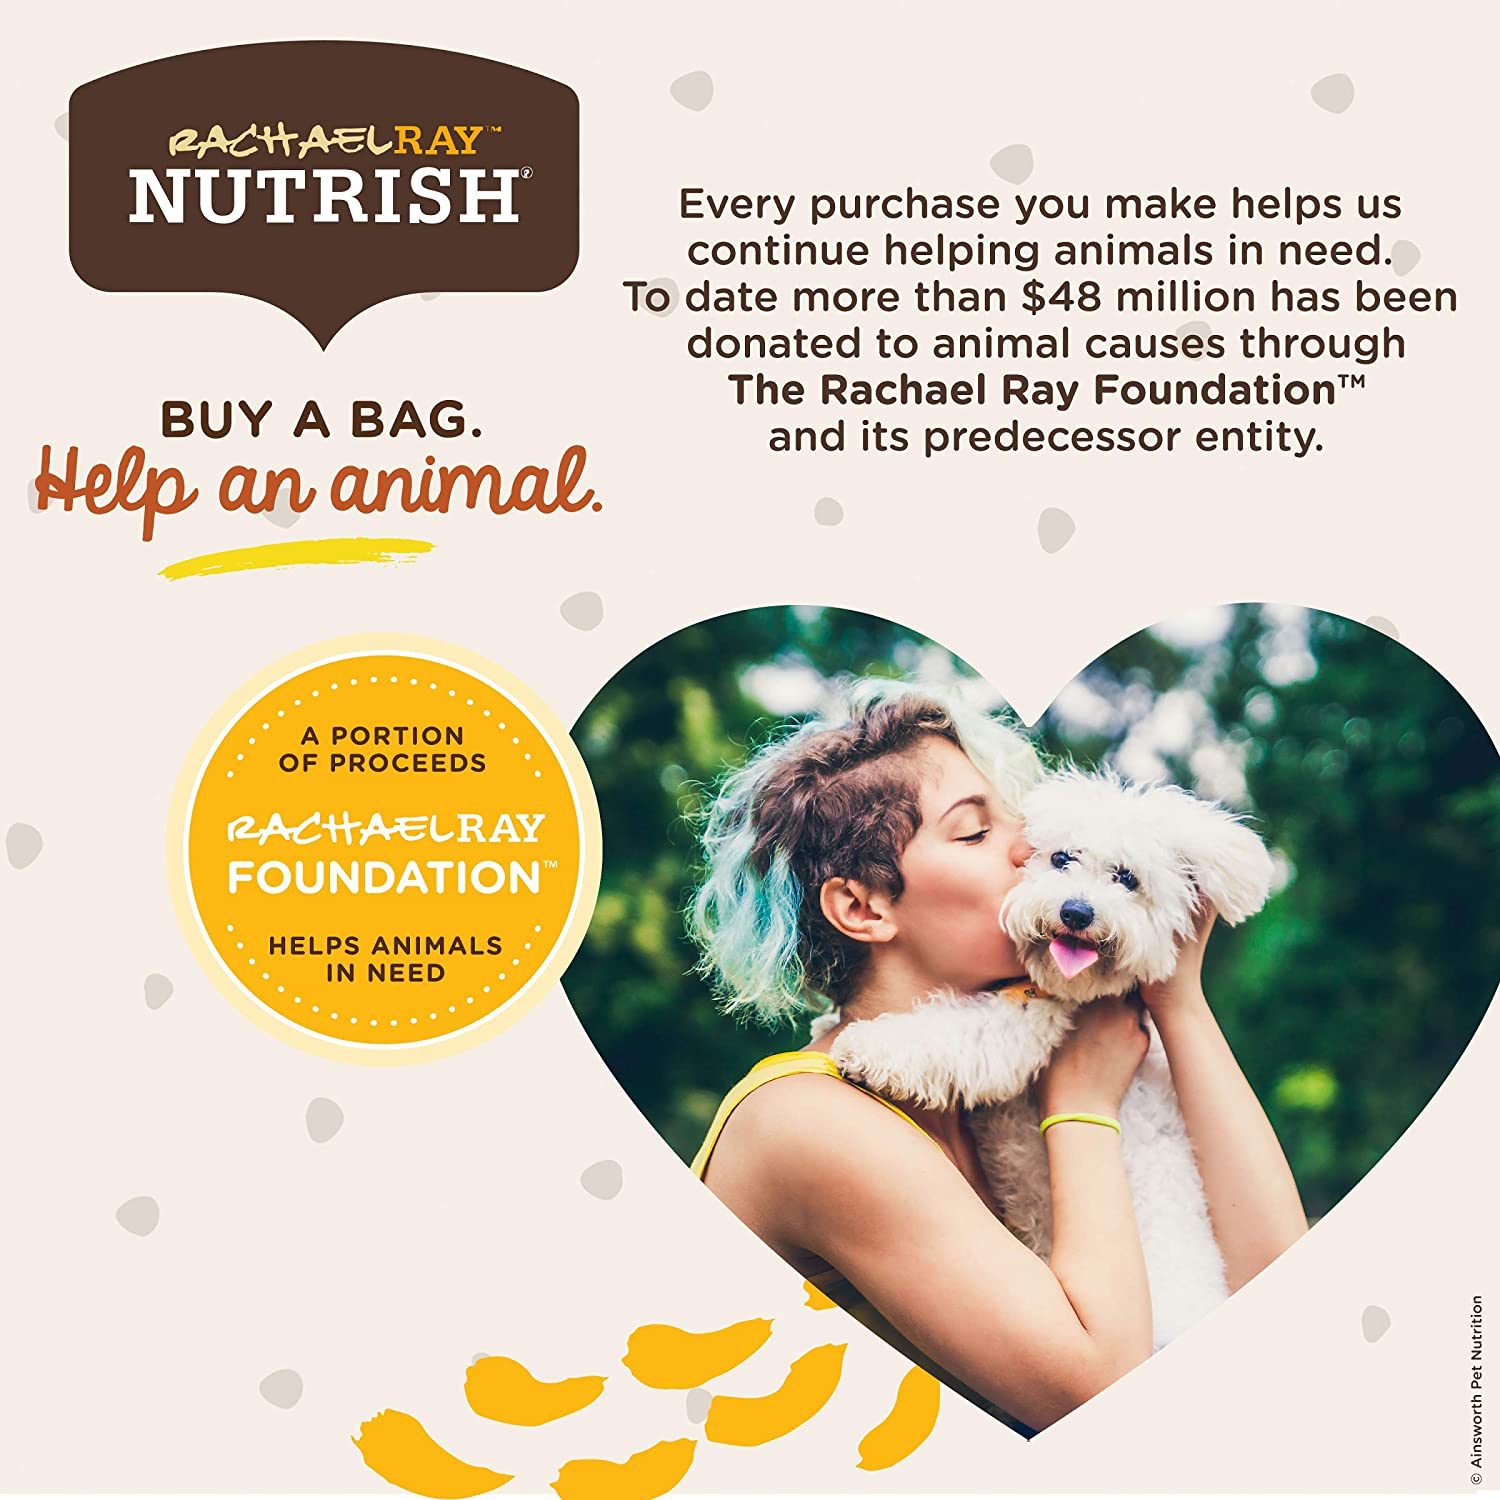 Rachael Ray Nutrish Soup Bones Longer Lasting Dog Treat Chews Animals & Pet Supplies > Pet Supplies > Dog Supplies > Dog Treats Rachael Ray Nutrish   